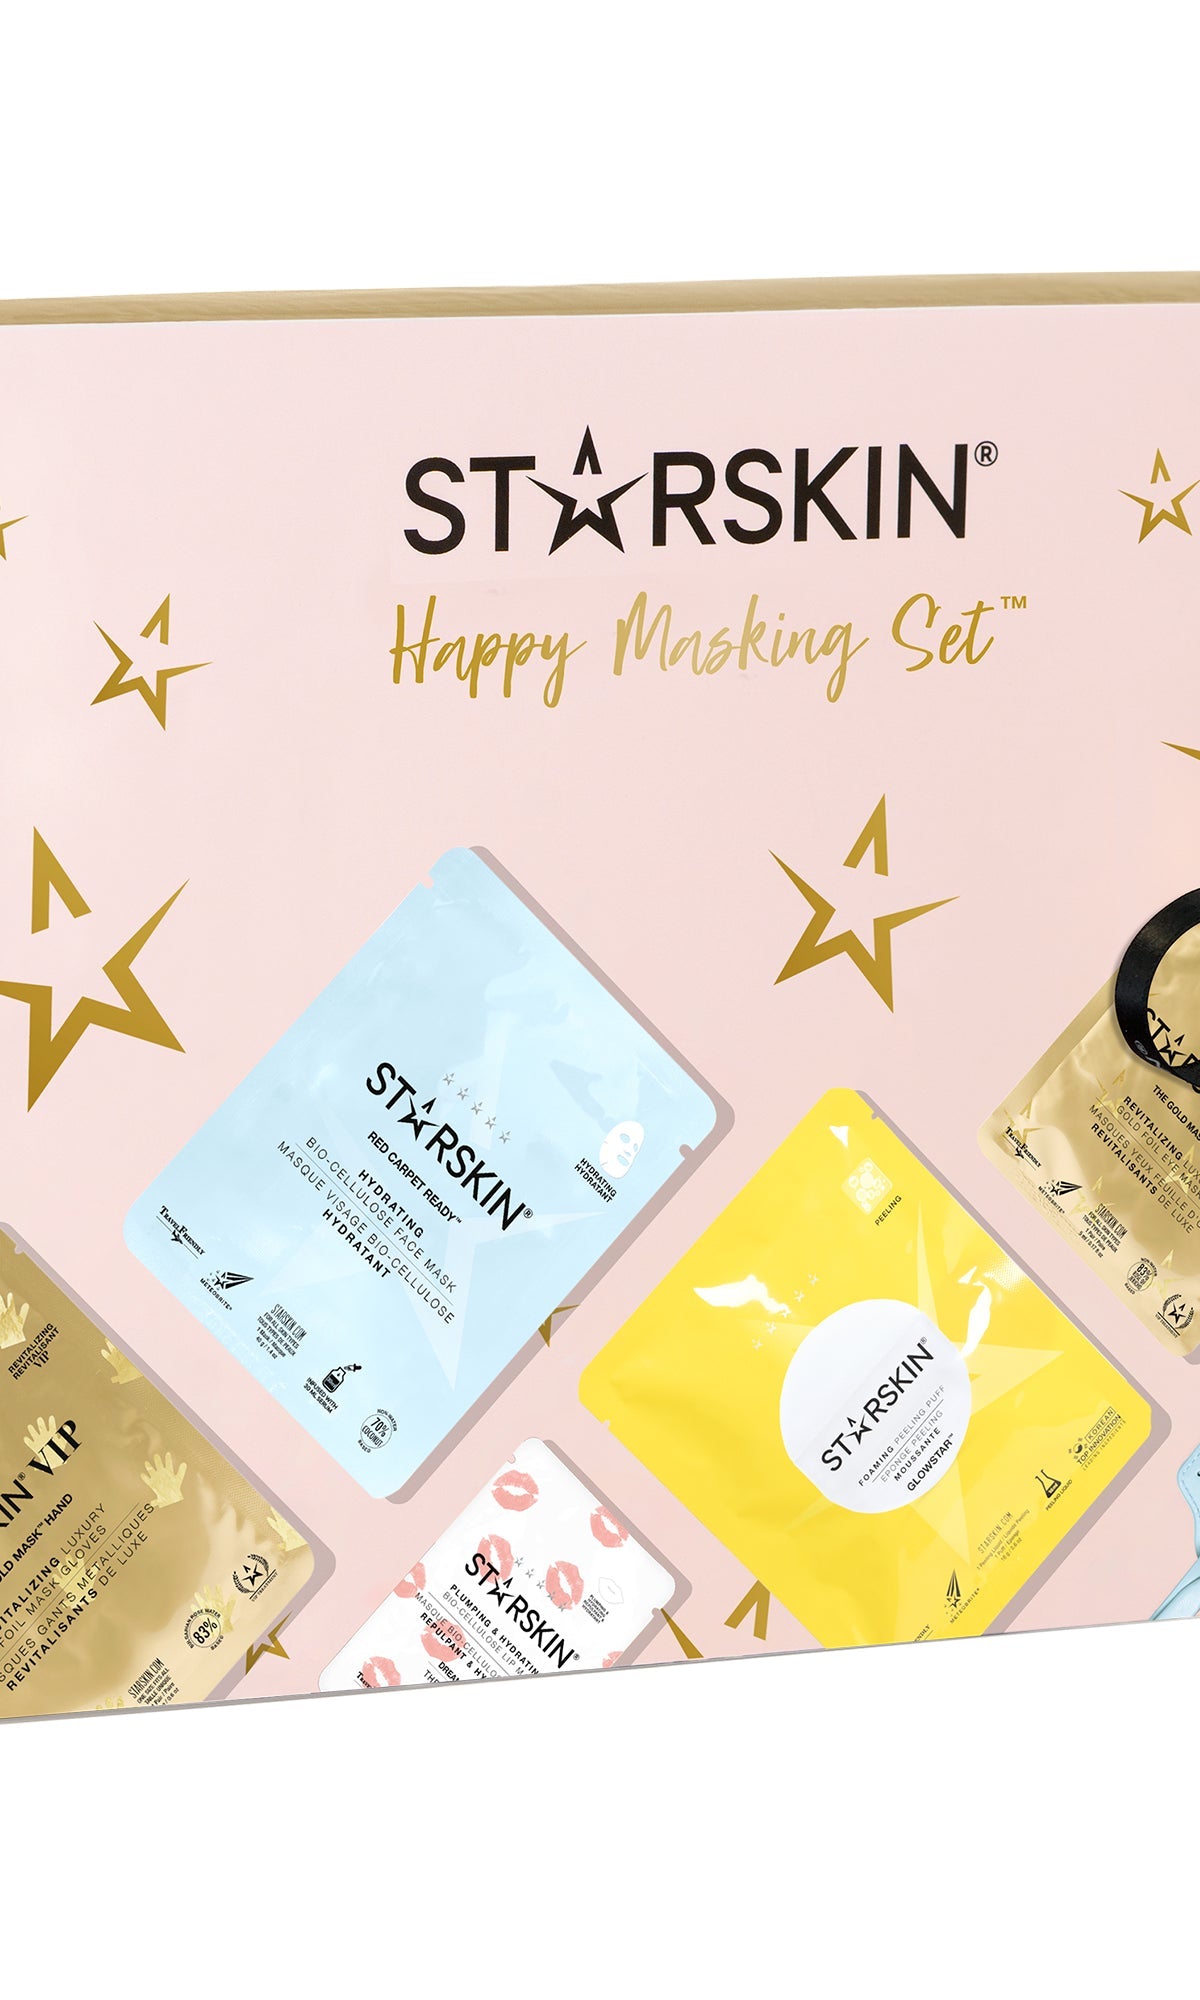 STARSKIN Happy Masking Gift set Grace Beauty